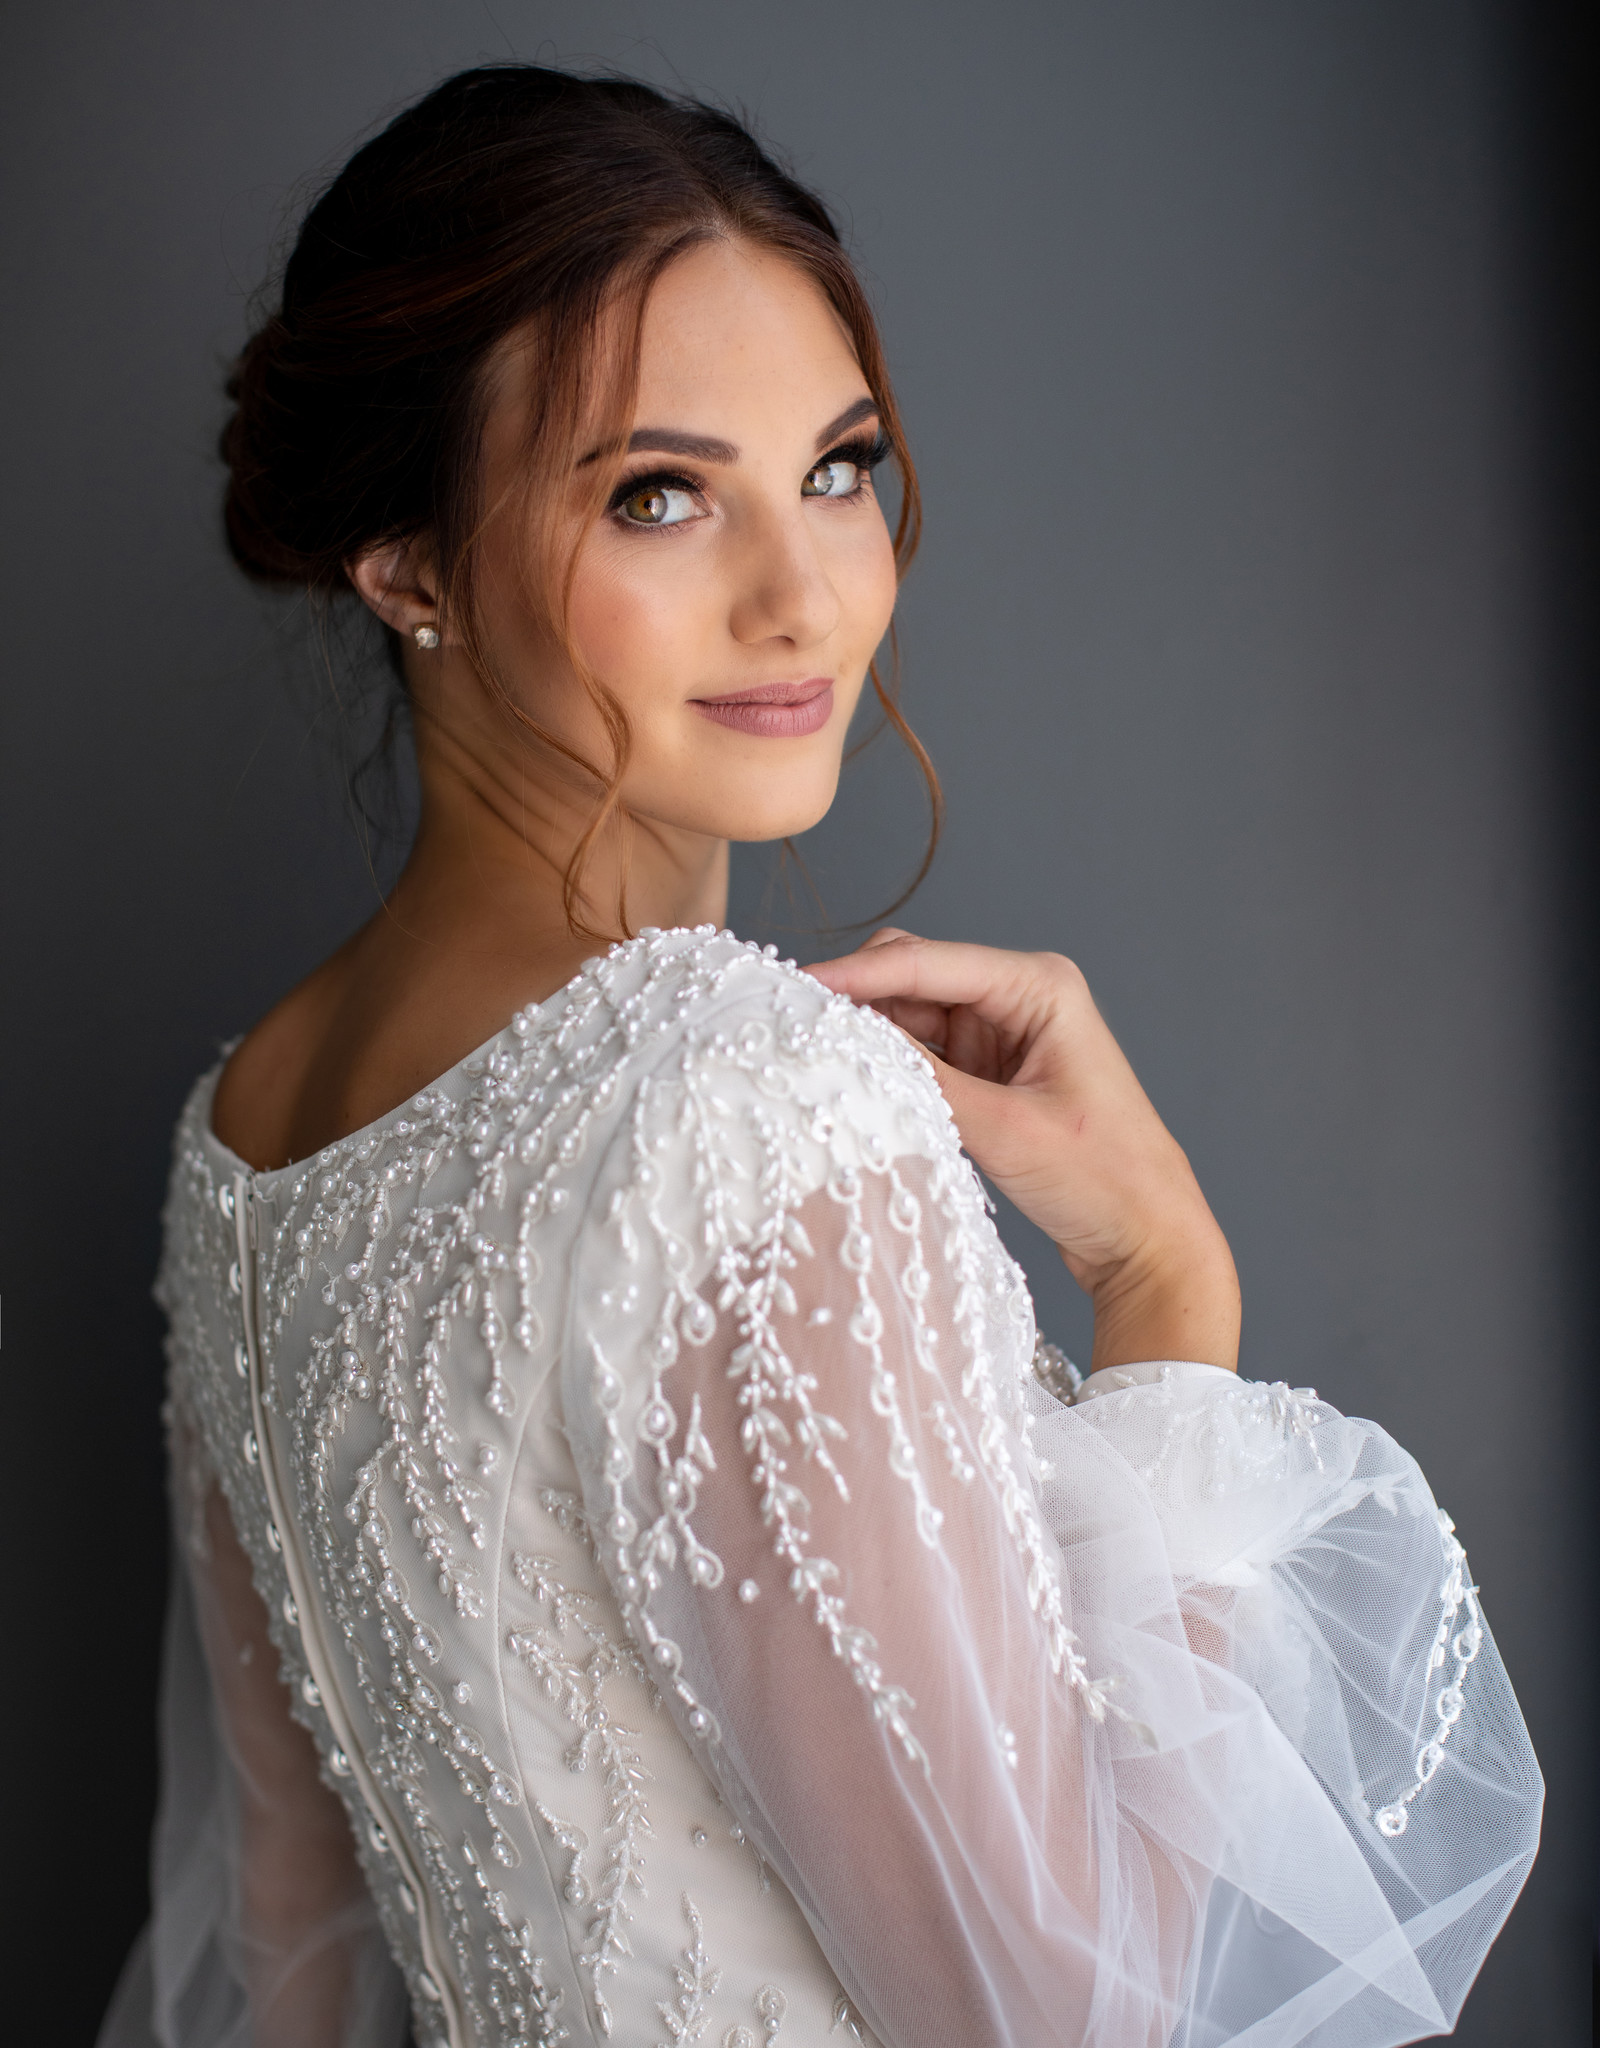 The Modest Bridal Collection Anastasia